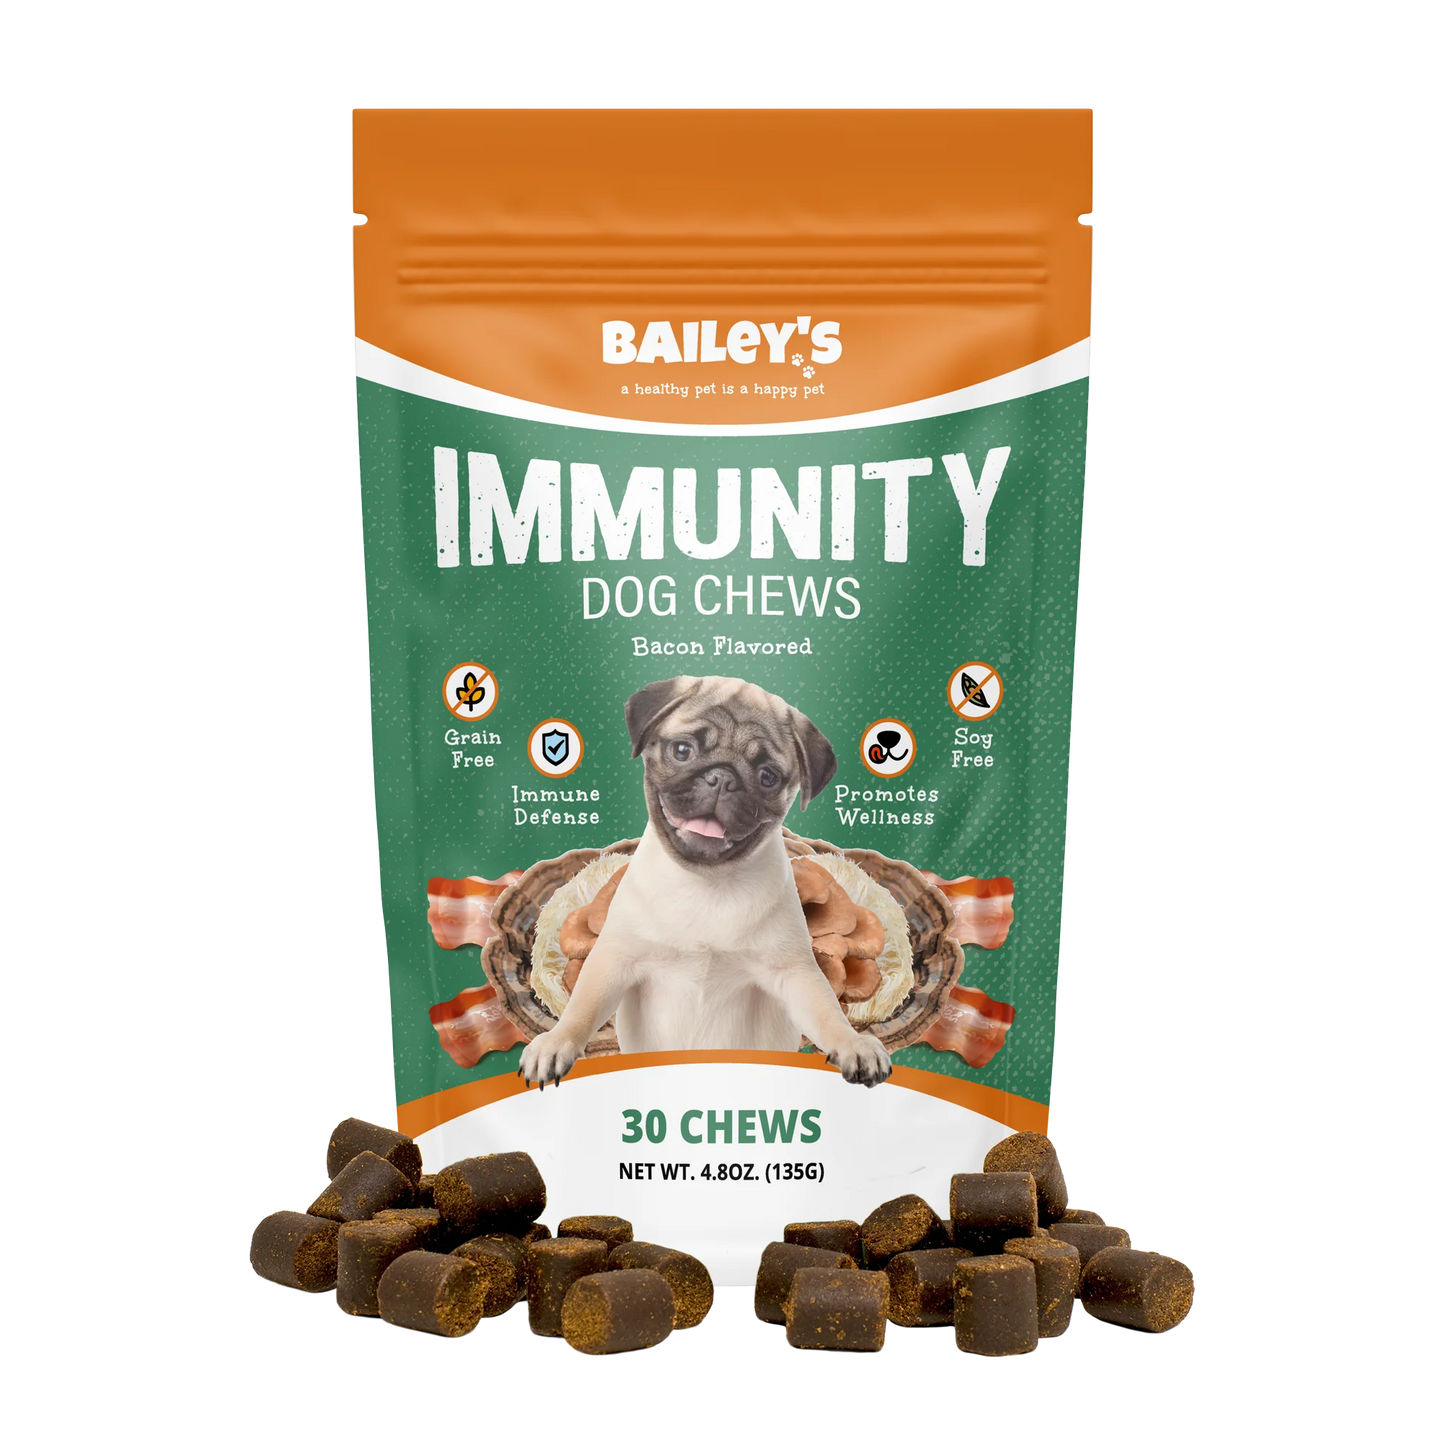 BAILEYS Immunity Dog Chews